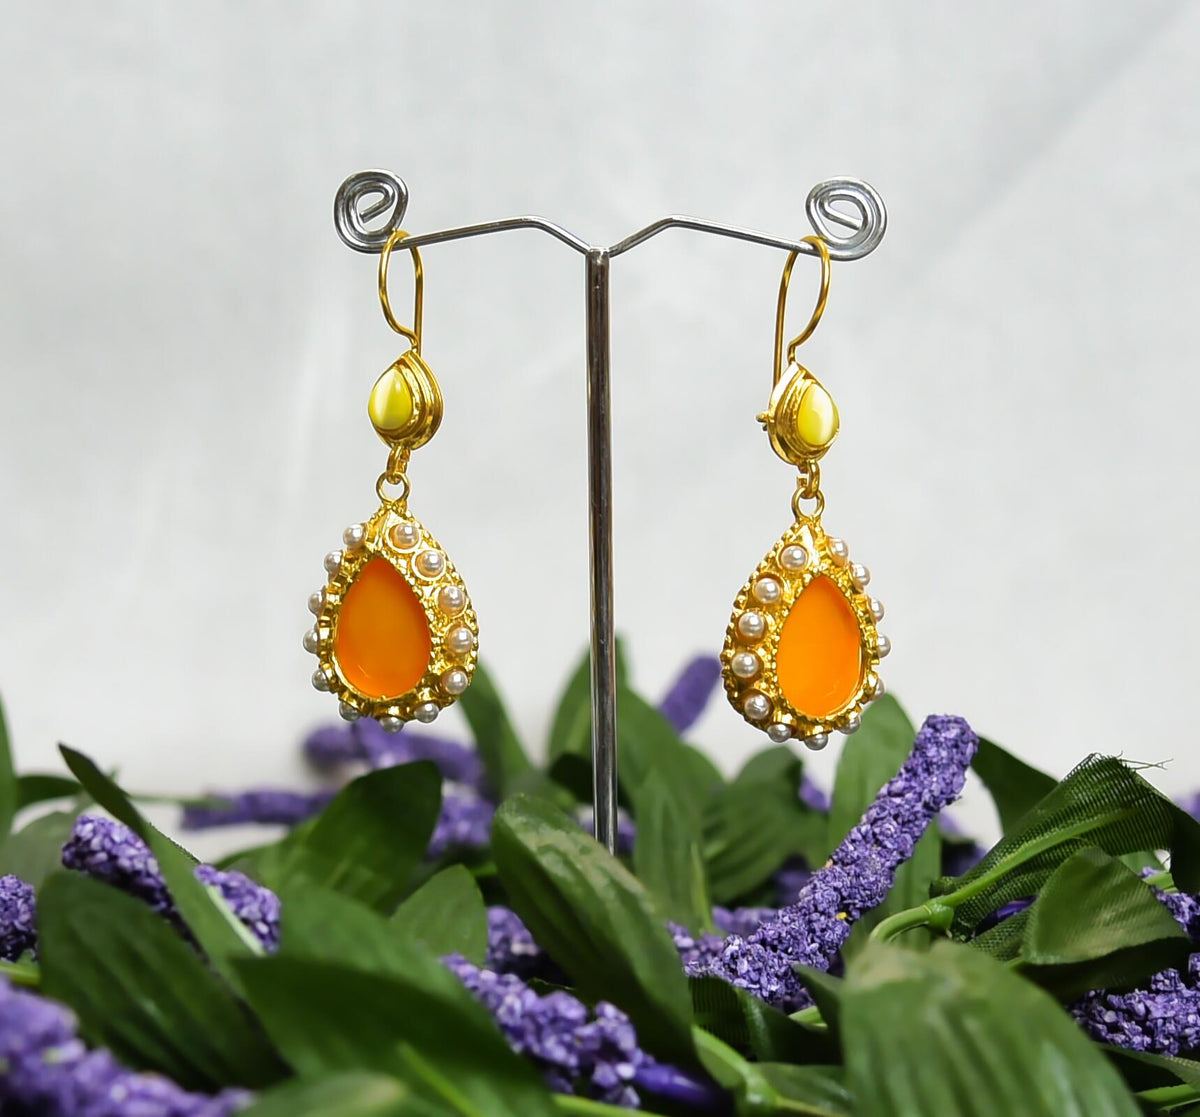 Orchard Orange, handmade Indian design Earrings with Orange & Yellow color stones